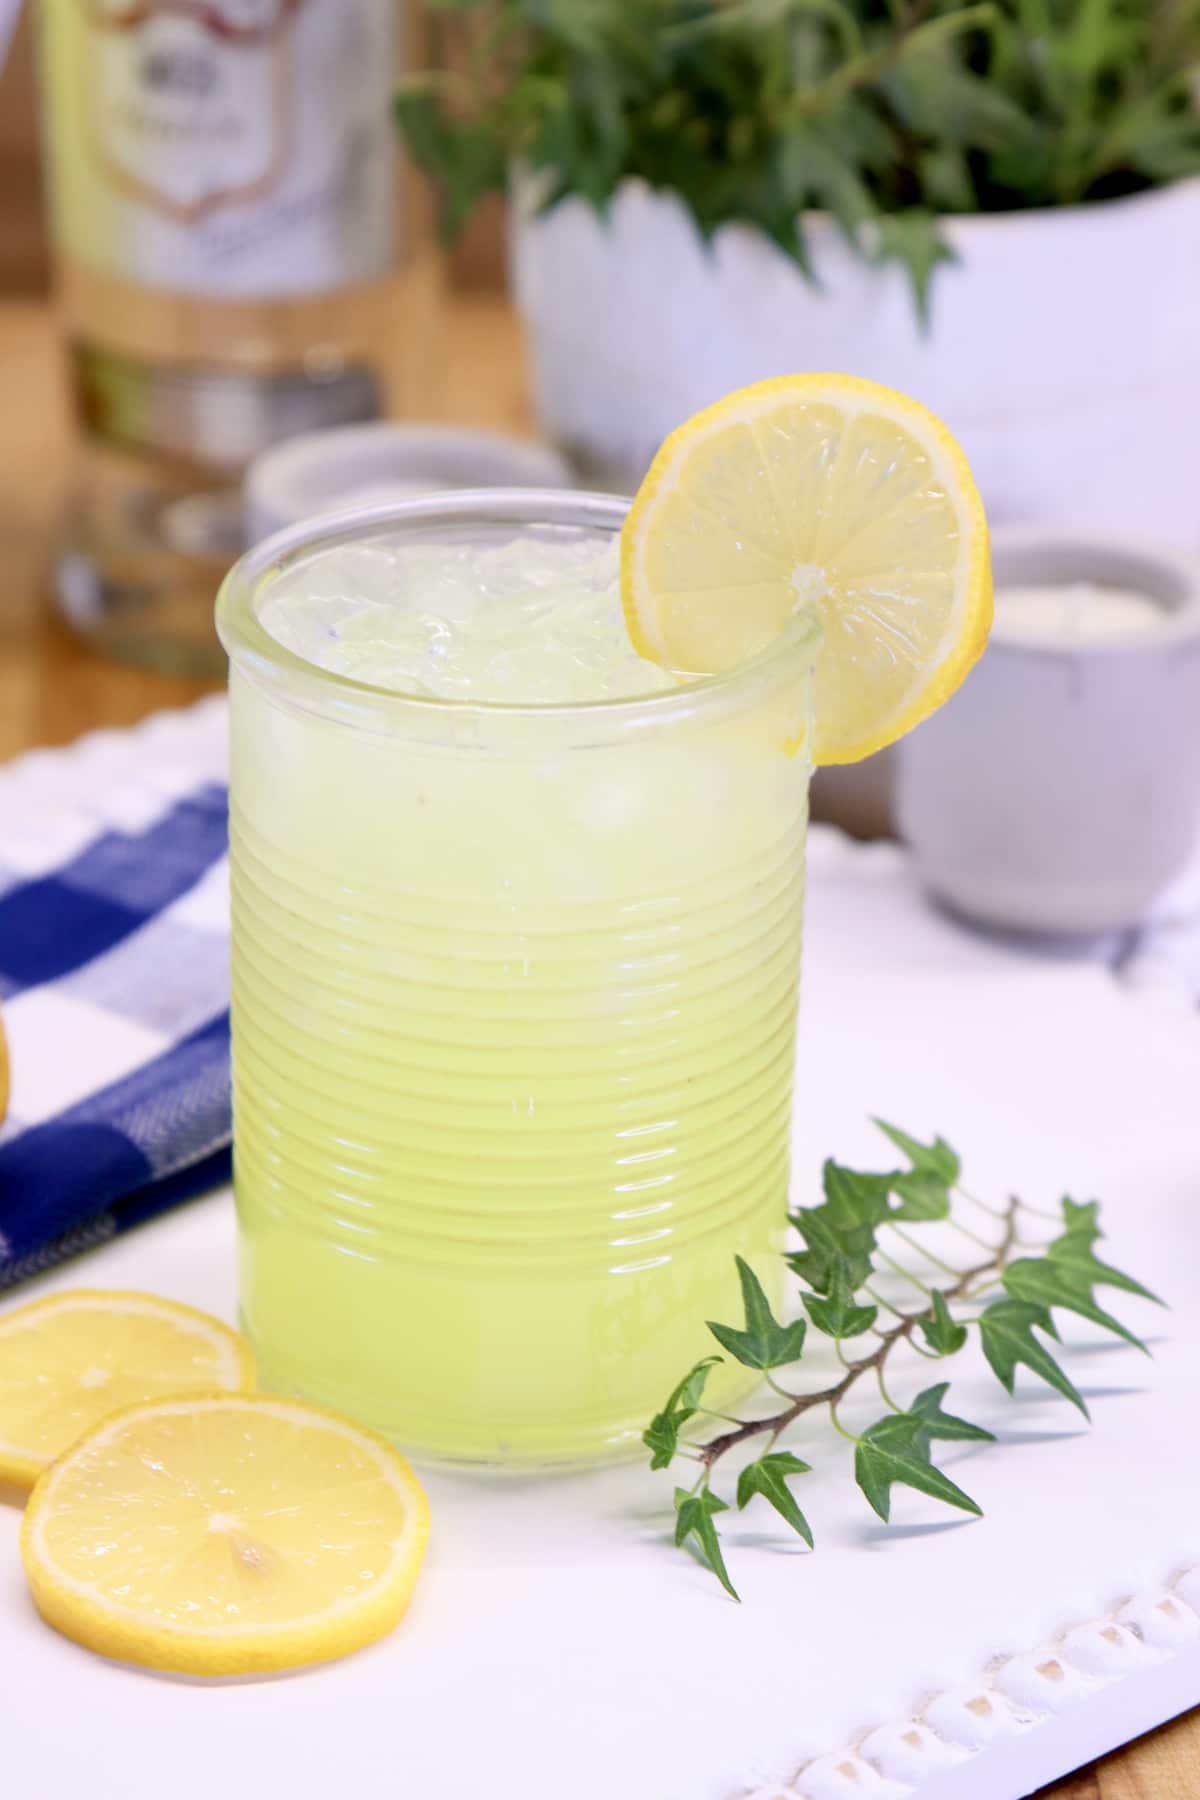 vodka lemonade in a glass with lemon garnish. Ivy in background.